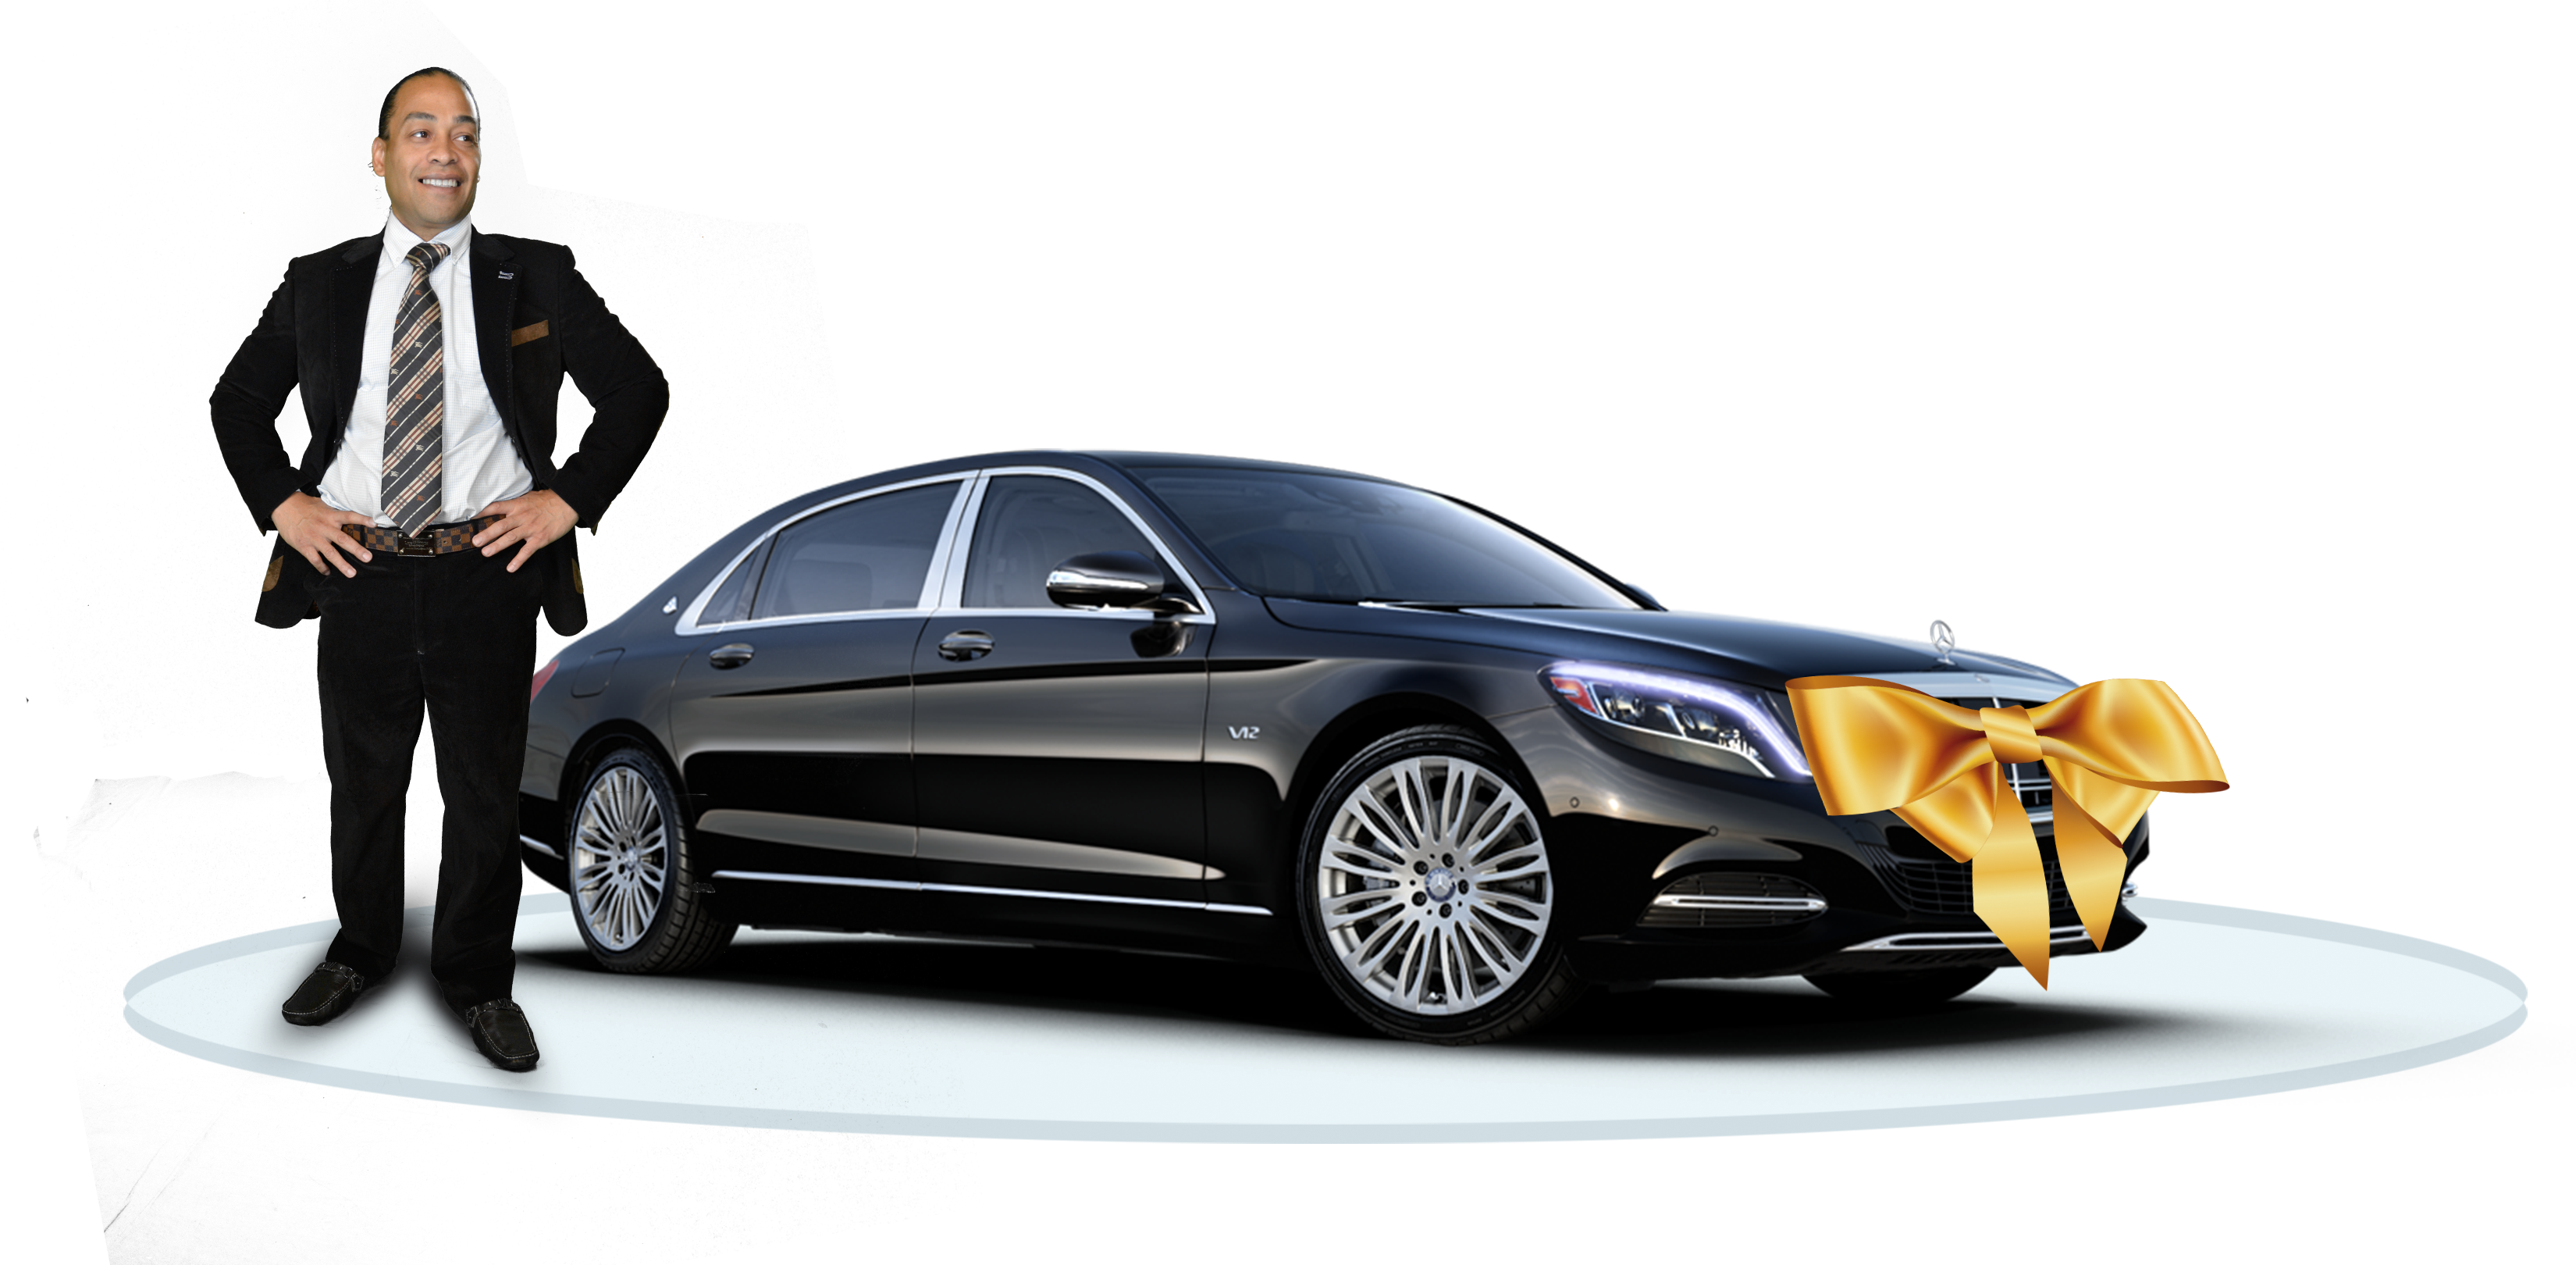 $200,000 - Executive Car (3300x1620), Png Download